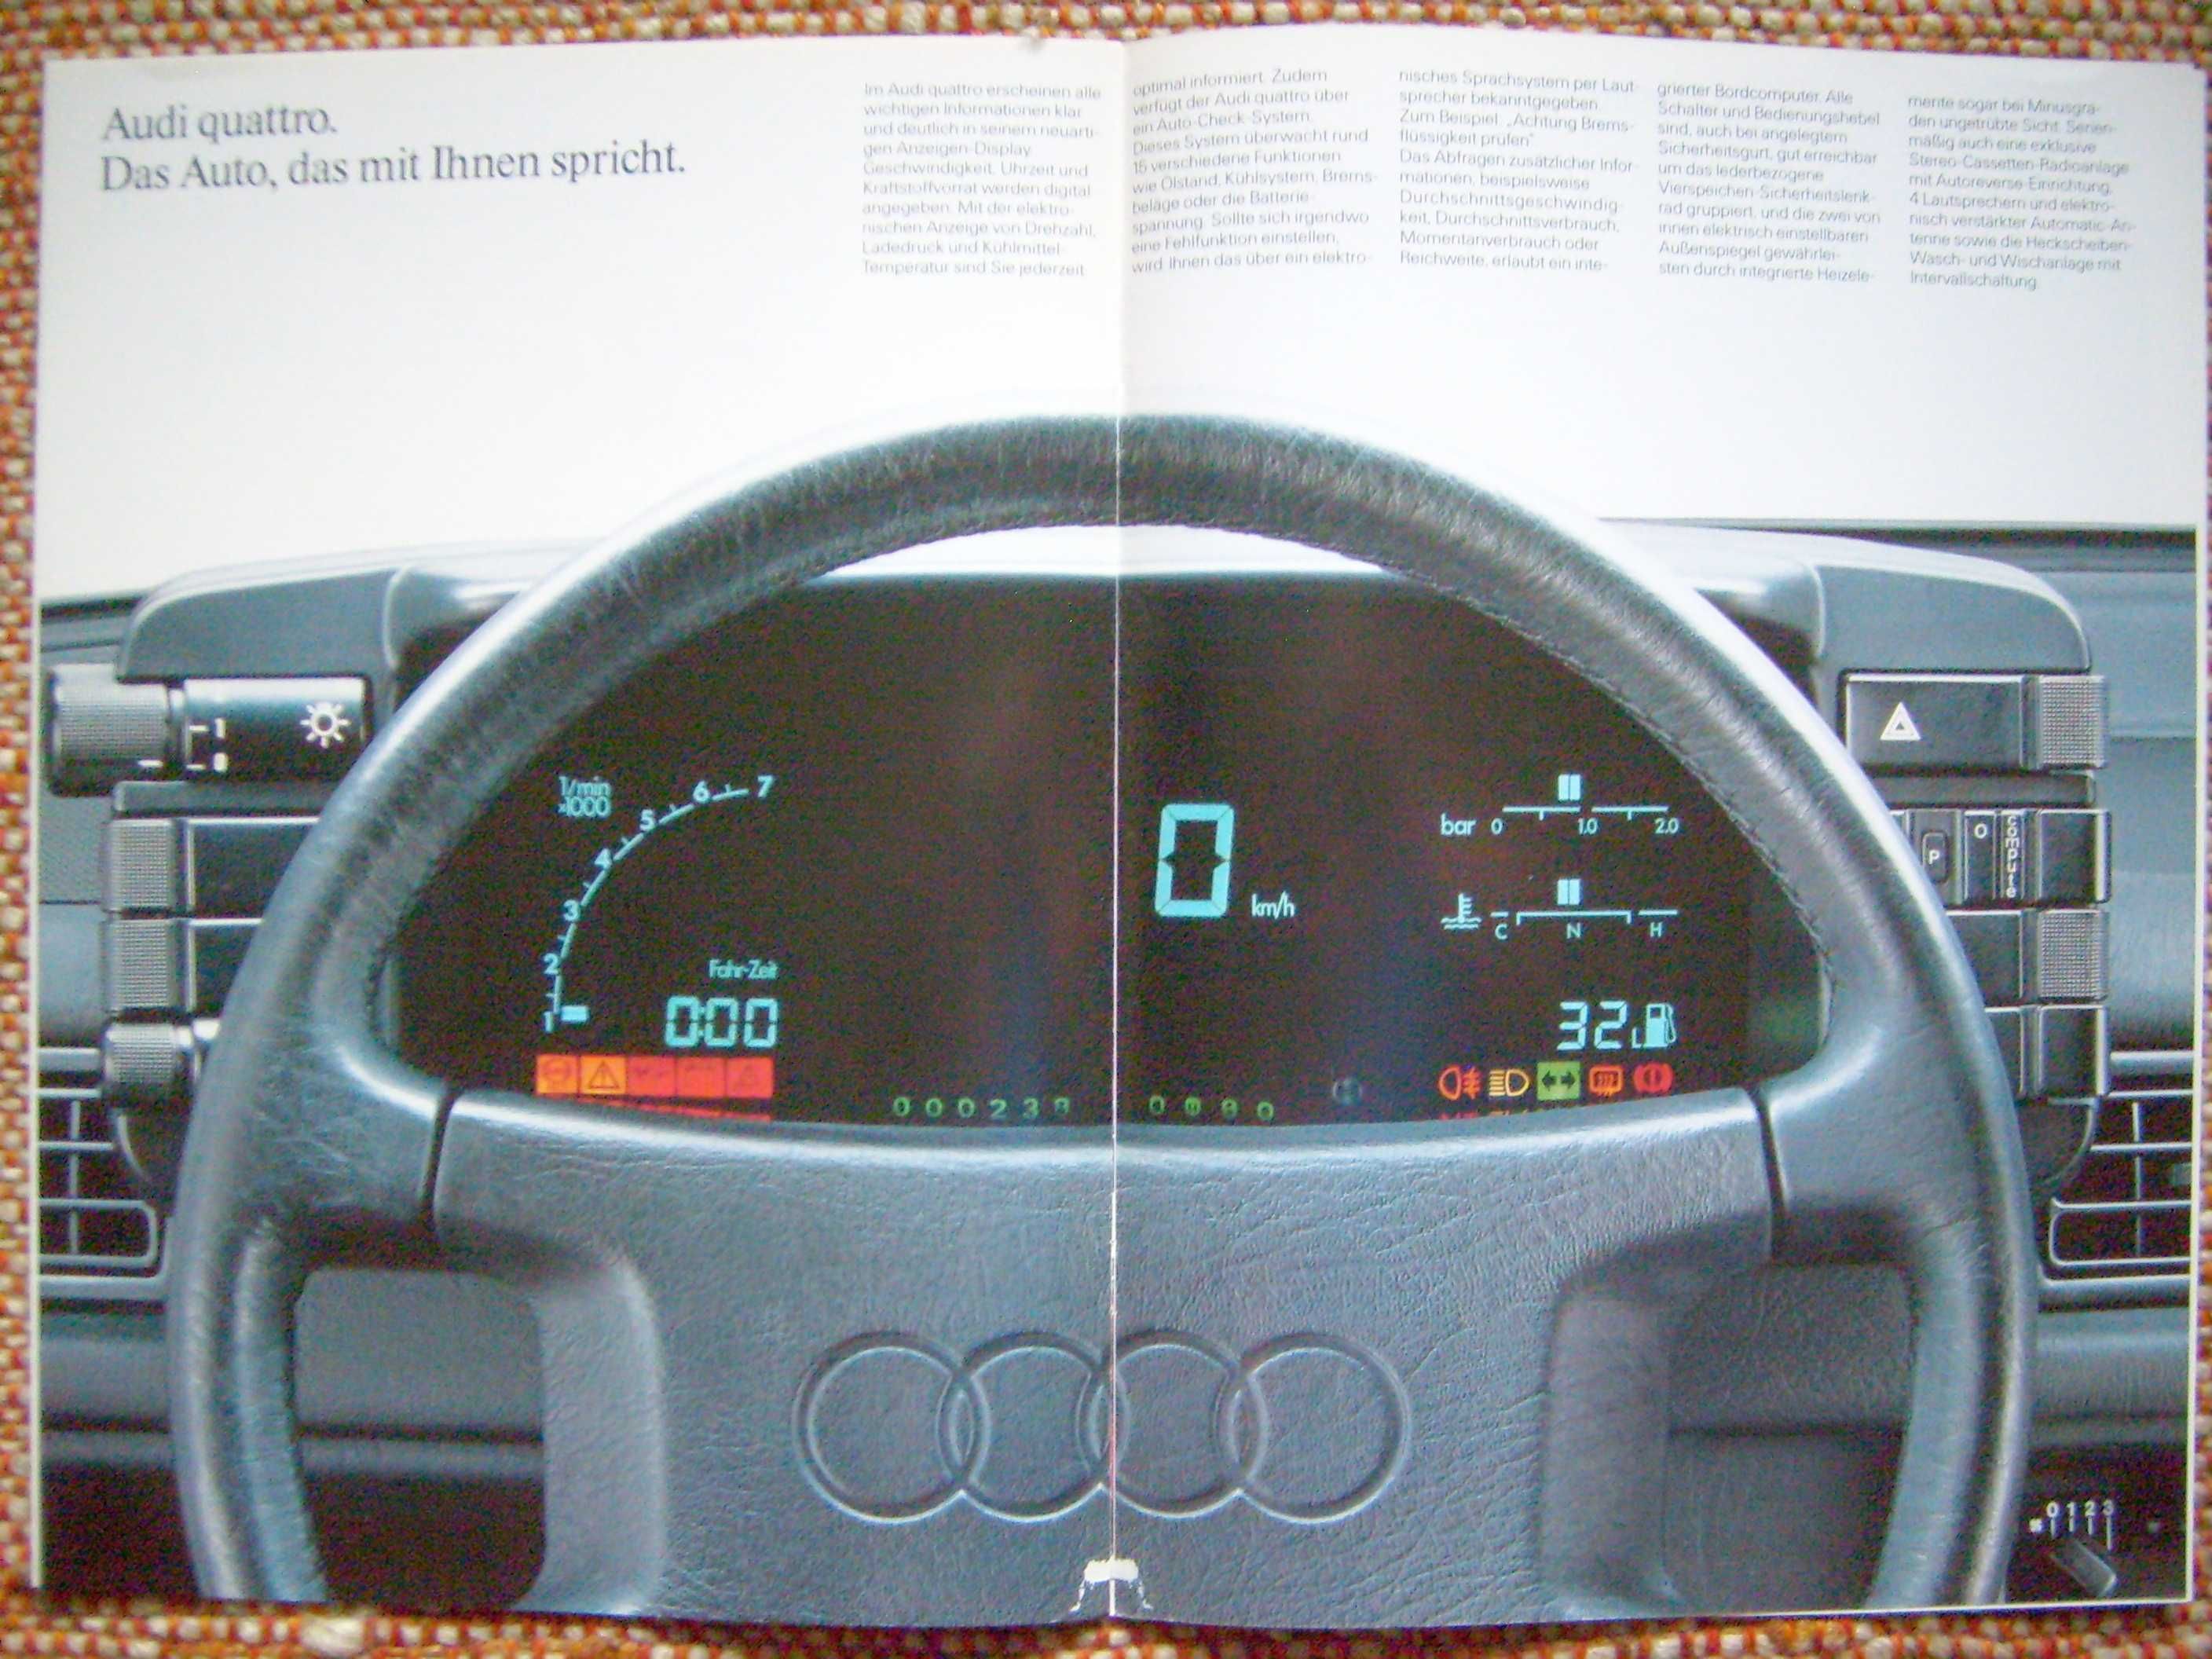 AUDI Quattro 2.2 / Typ 85 B2 * prospekt 1987 rok, 16 stron